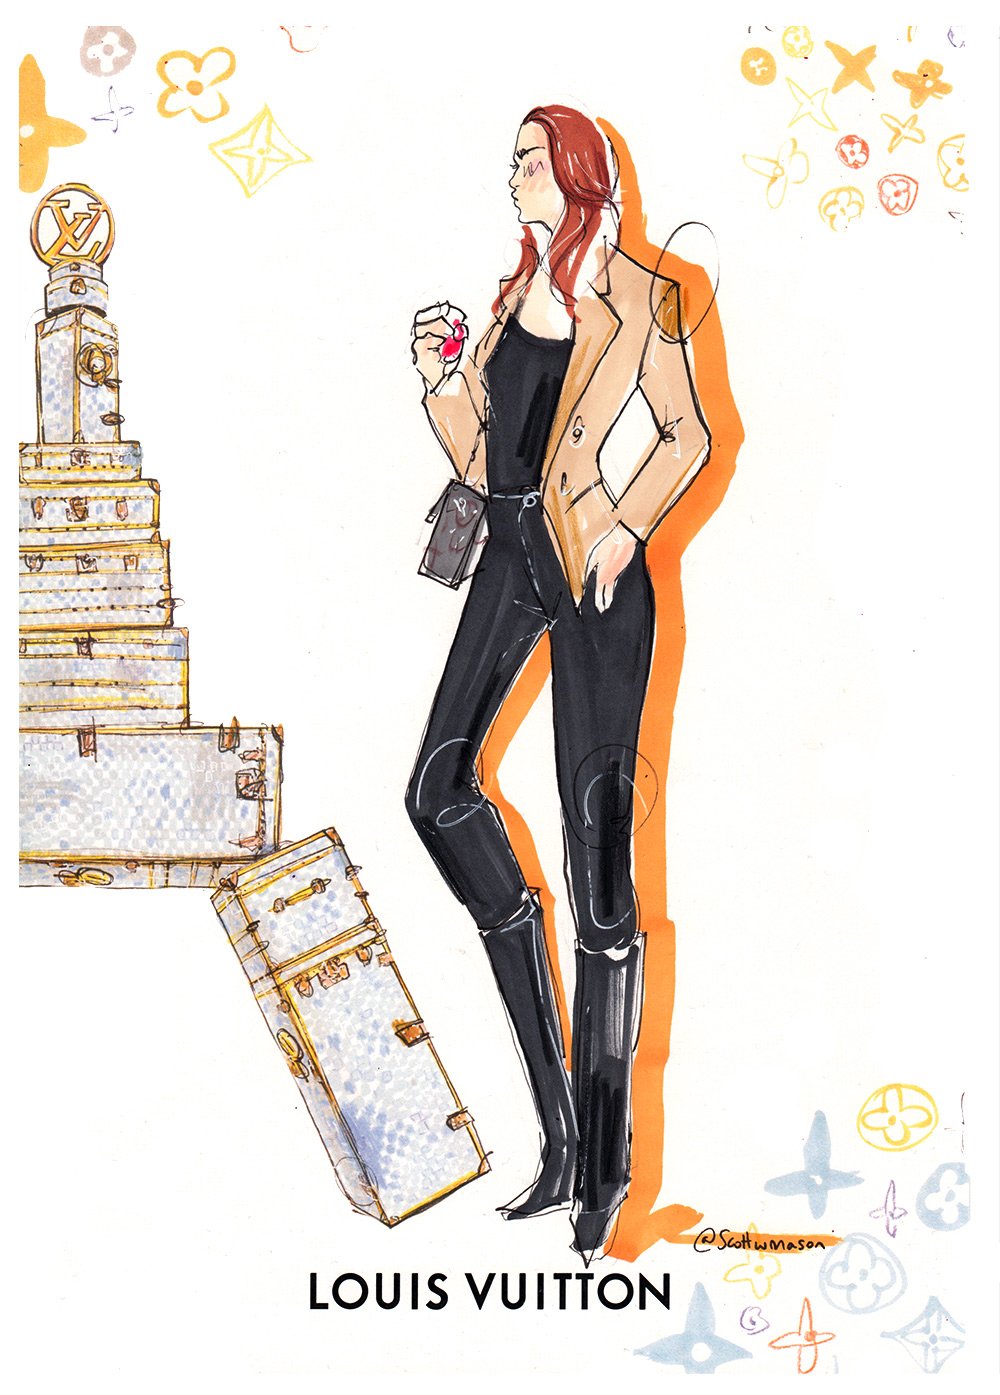 Louis-Vuitton-London-Event-Illustration.jpg